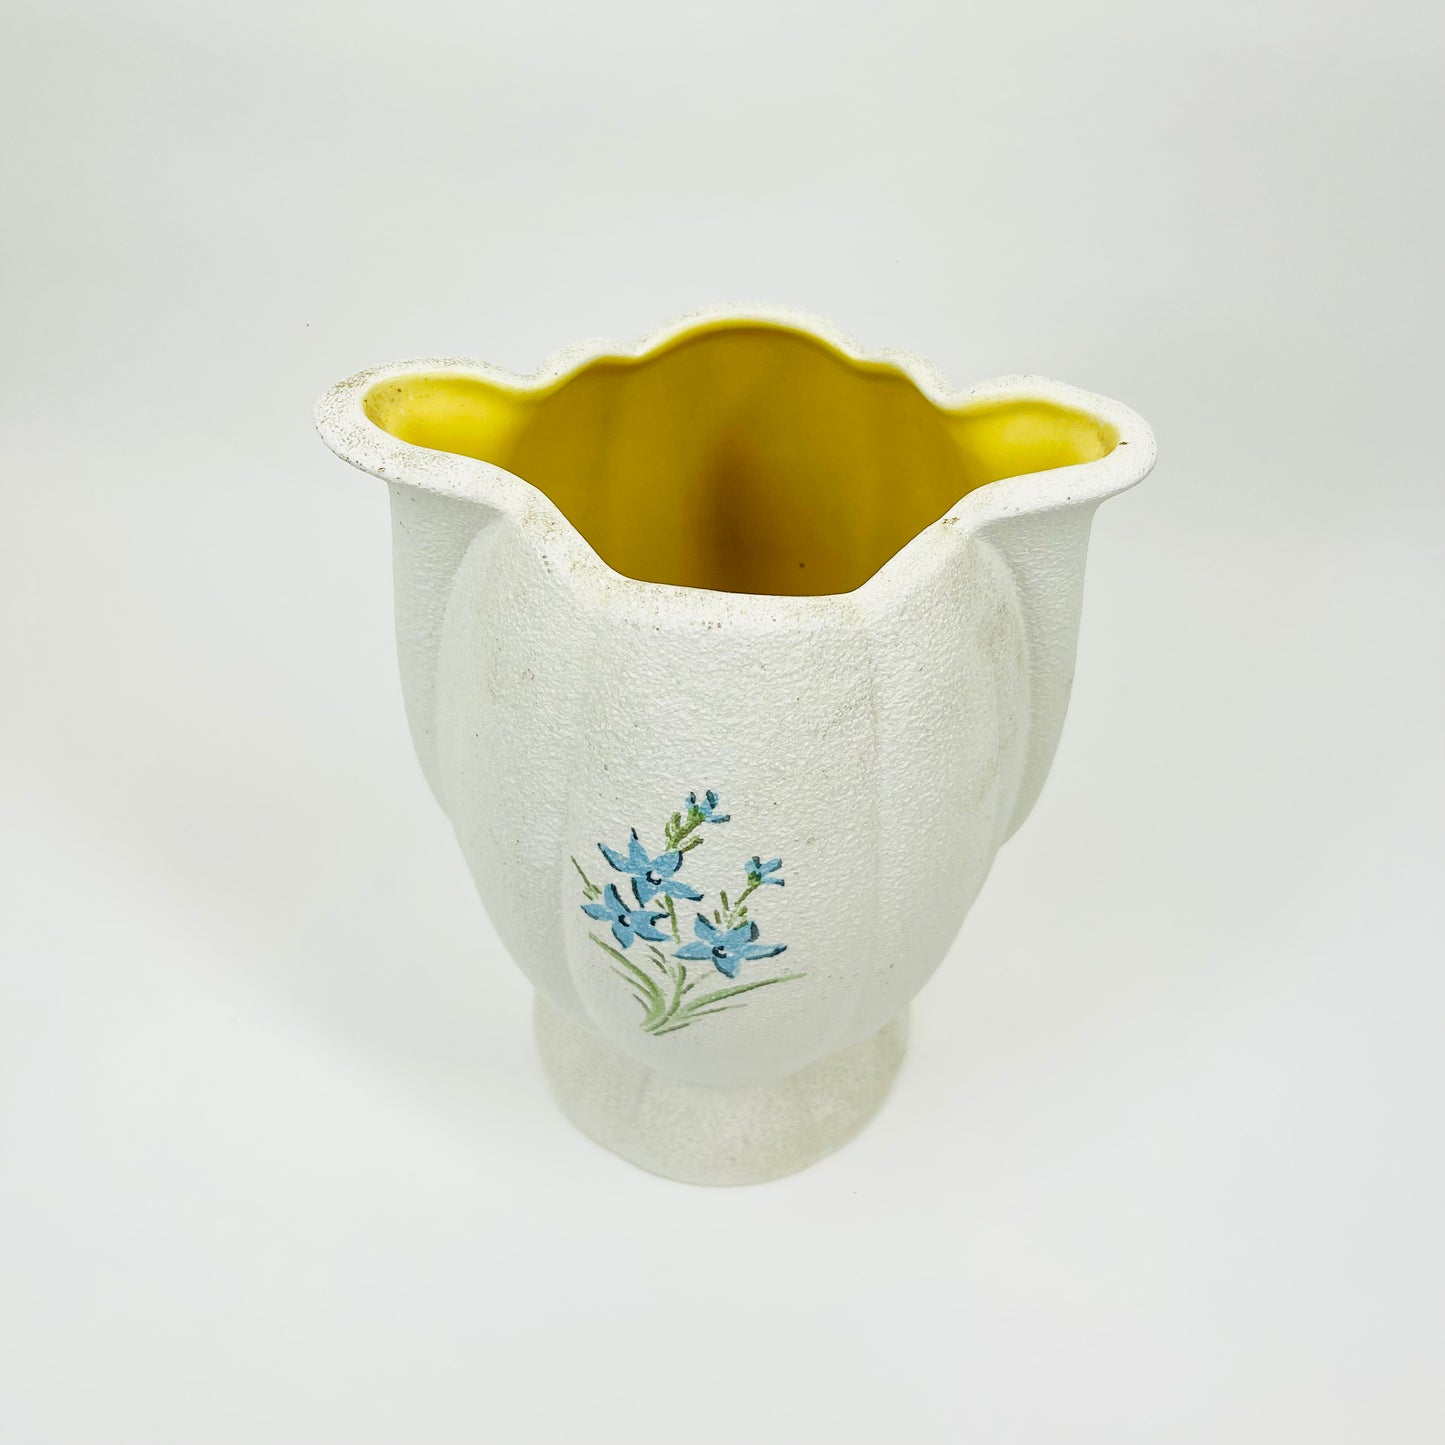 Retro Australian Raynham white pottery vase with hand painted blue flowers